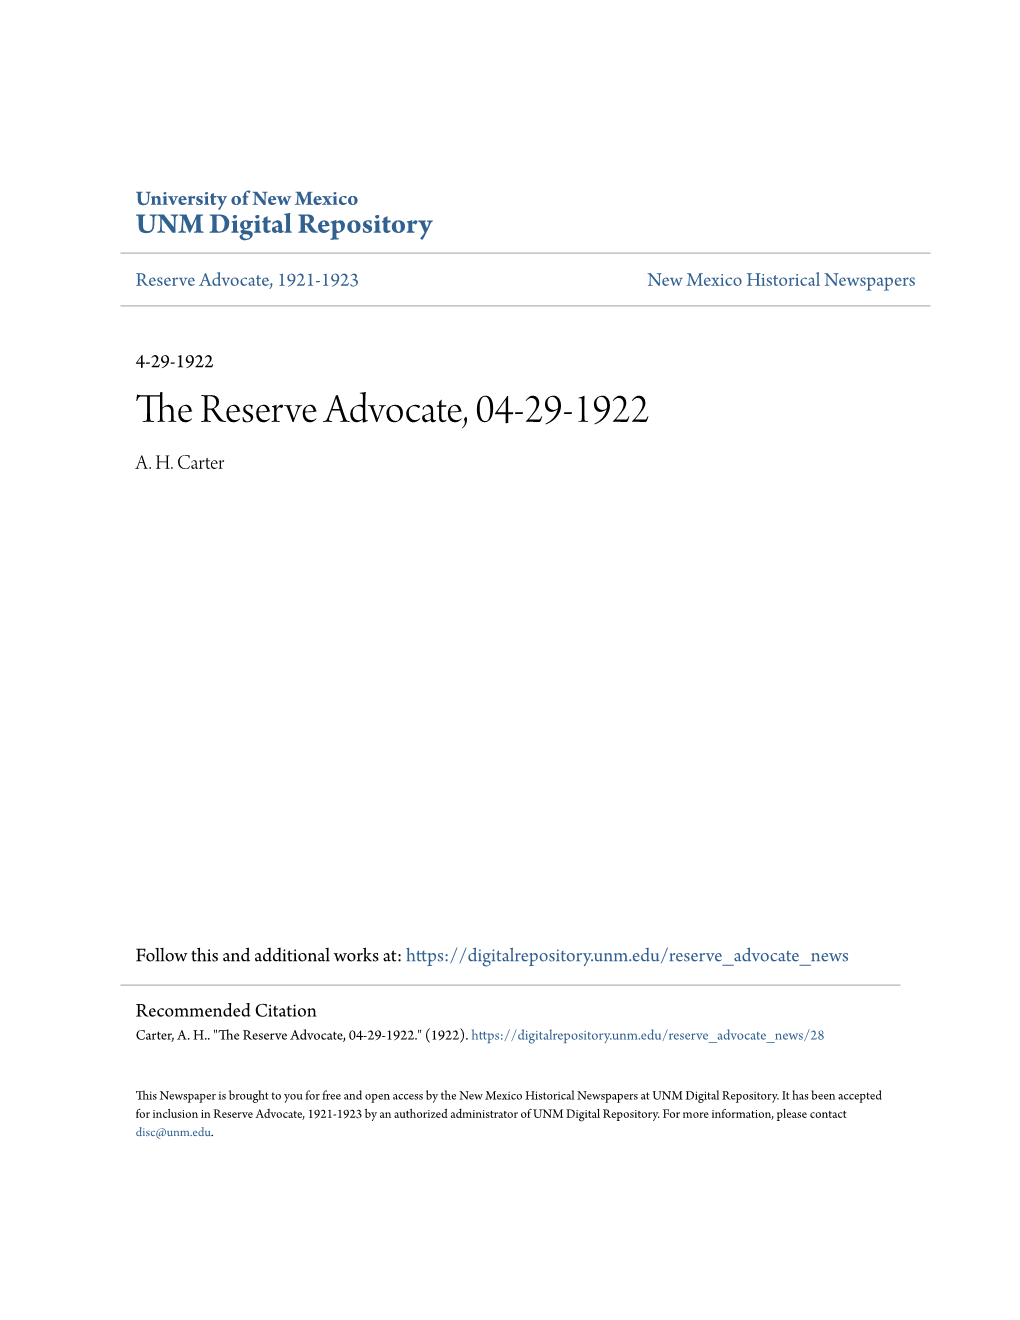 The Reserve Advocate, 04-29-1922 A